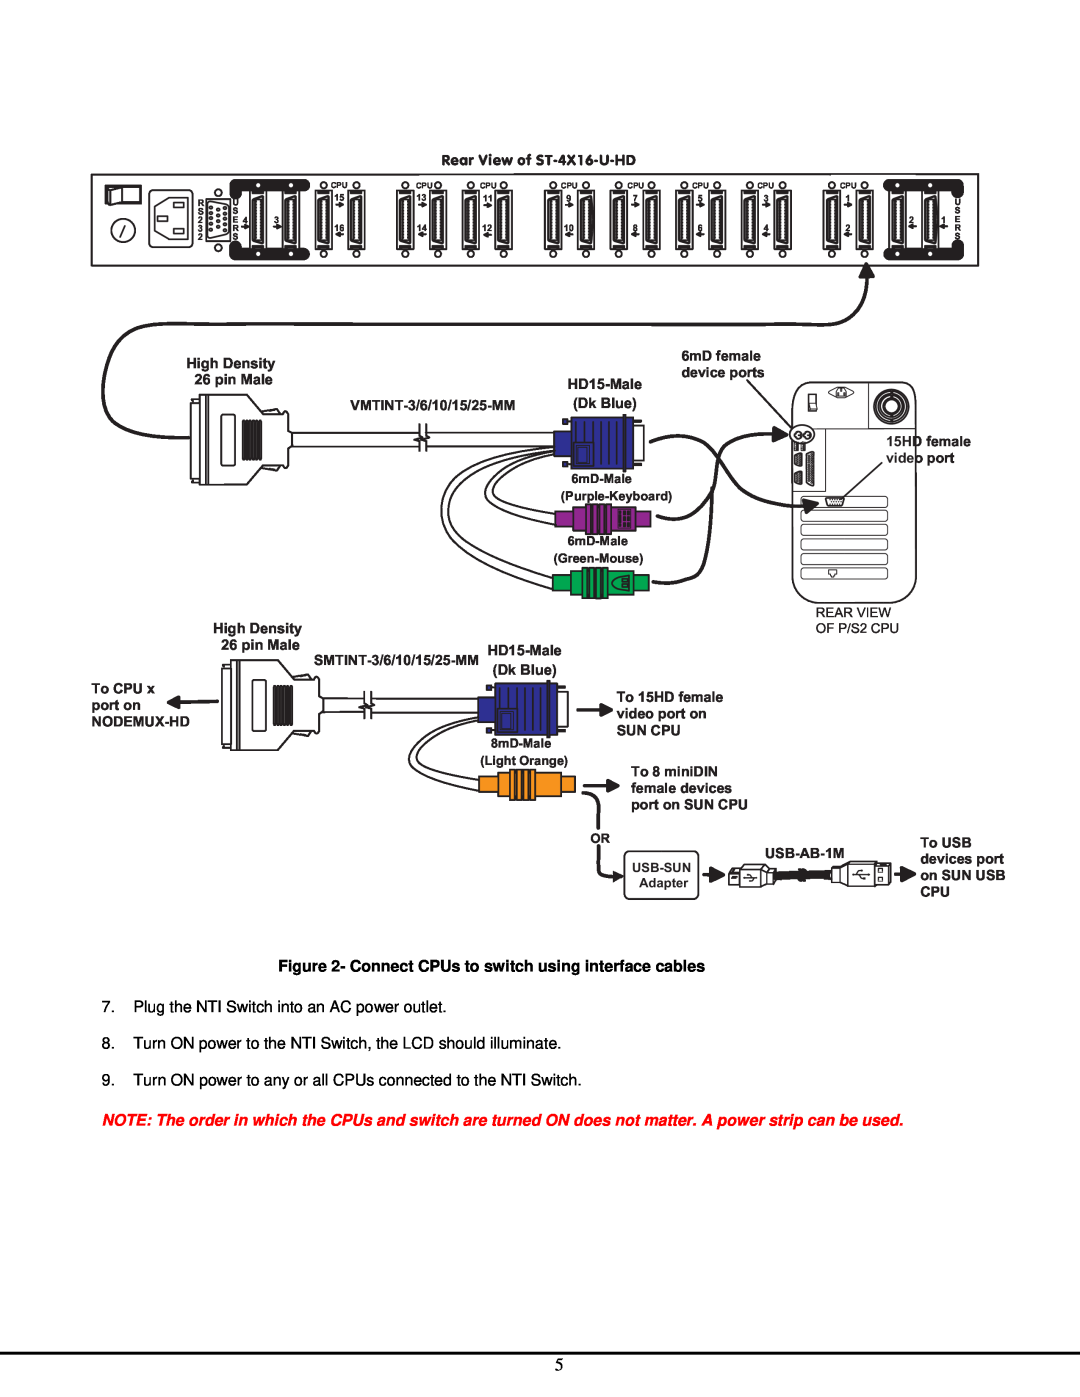 Network Technologies ST-NXM-U-HD manual RearViewofST-4X16-U-HD, Plug the NTI Switch into an AC power outlet 